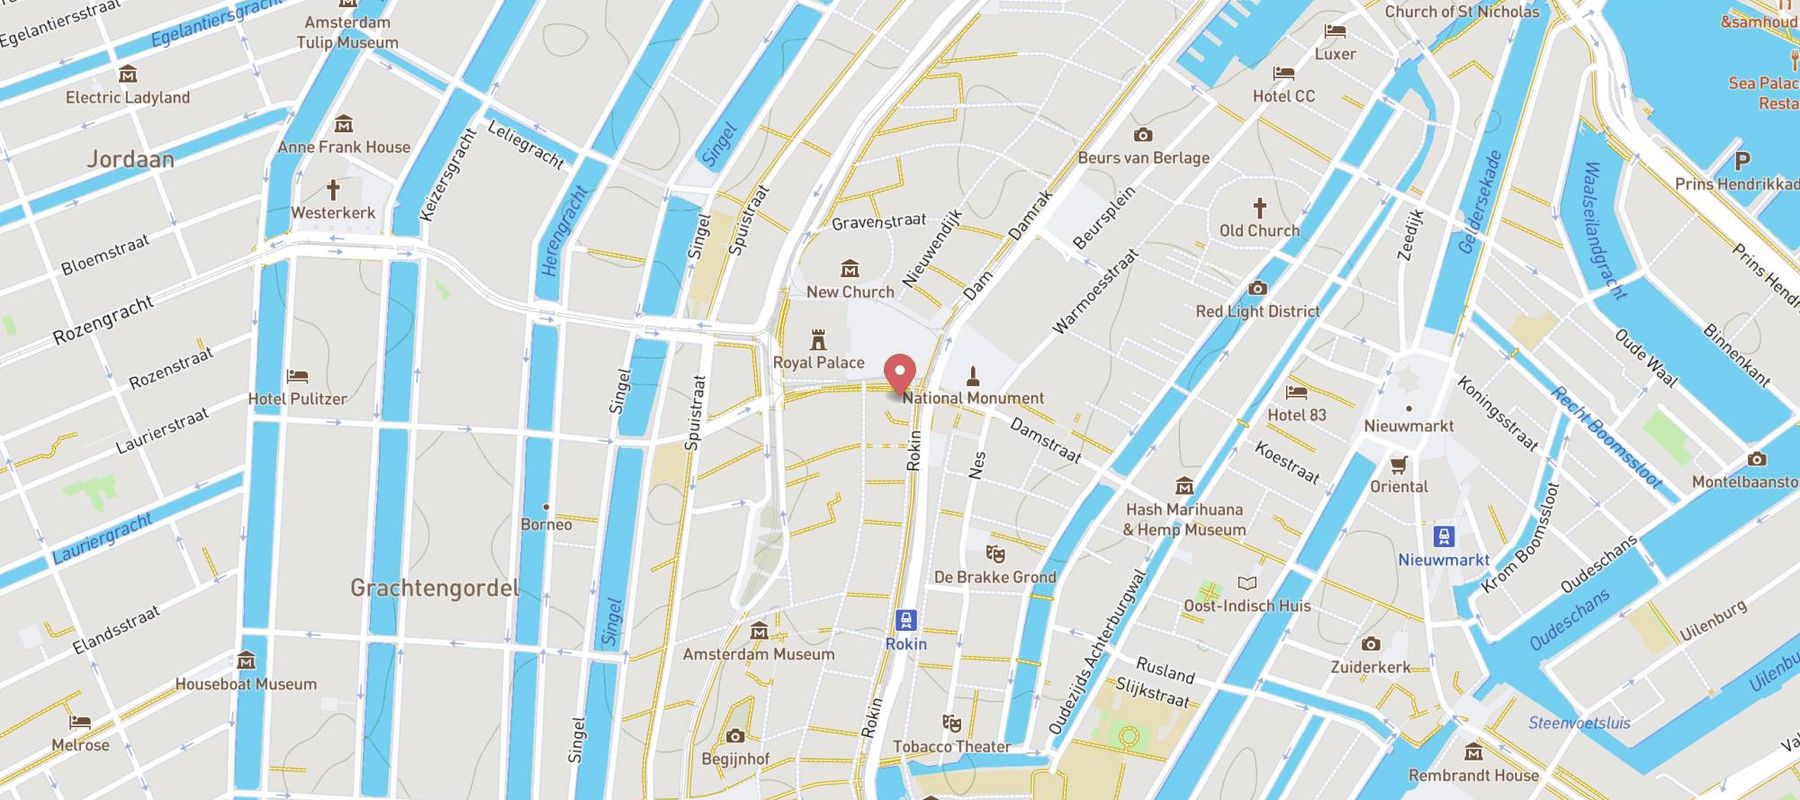 Madame Tussauds Amsterdam map